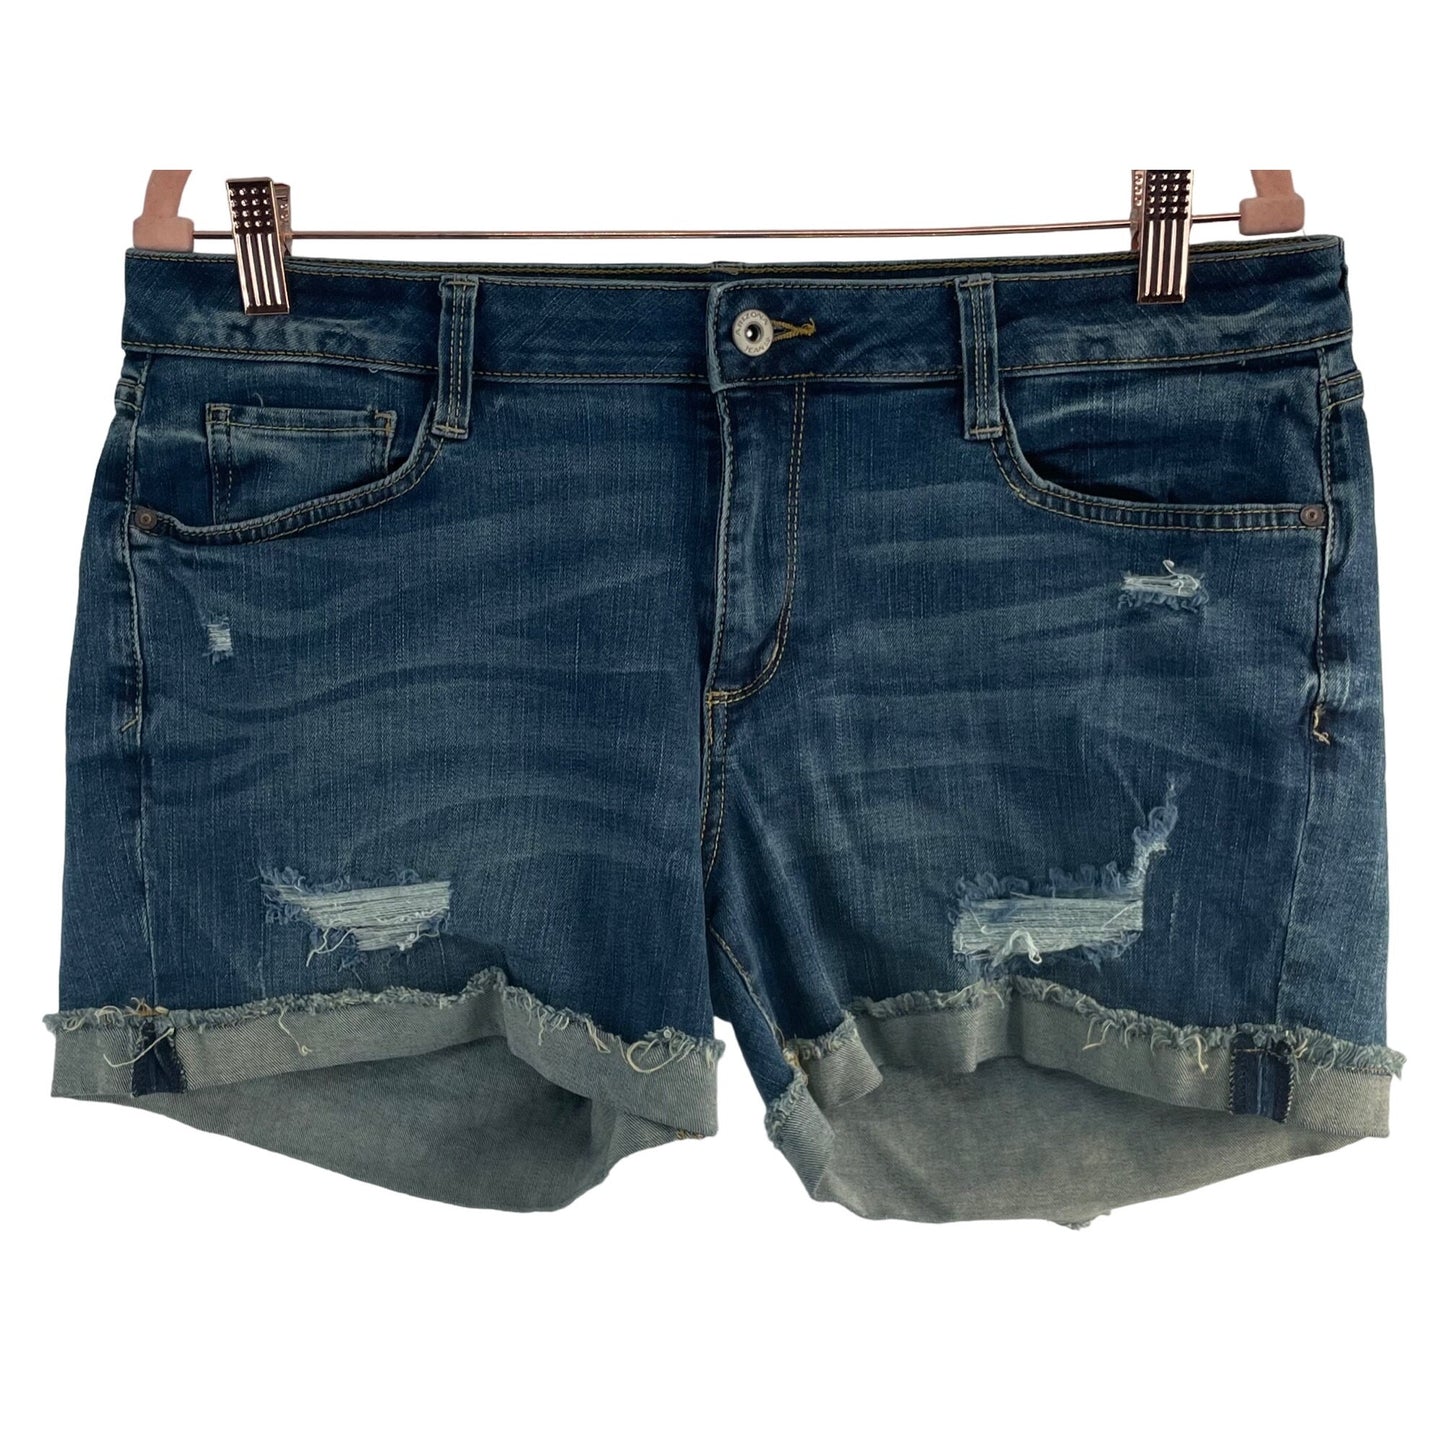 Arizona Jean Company Women's Size 15 (Junior's) Distressed Denim Shorts